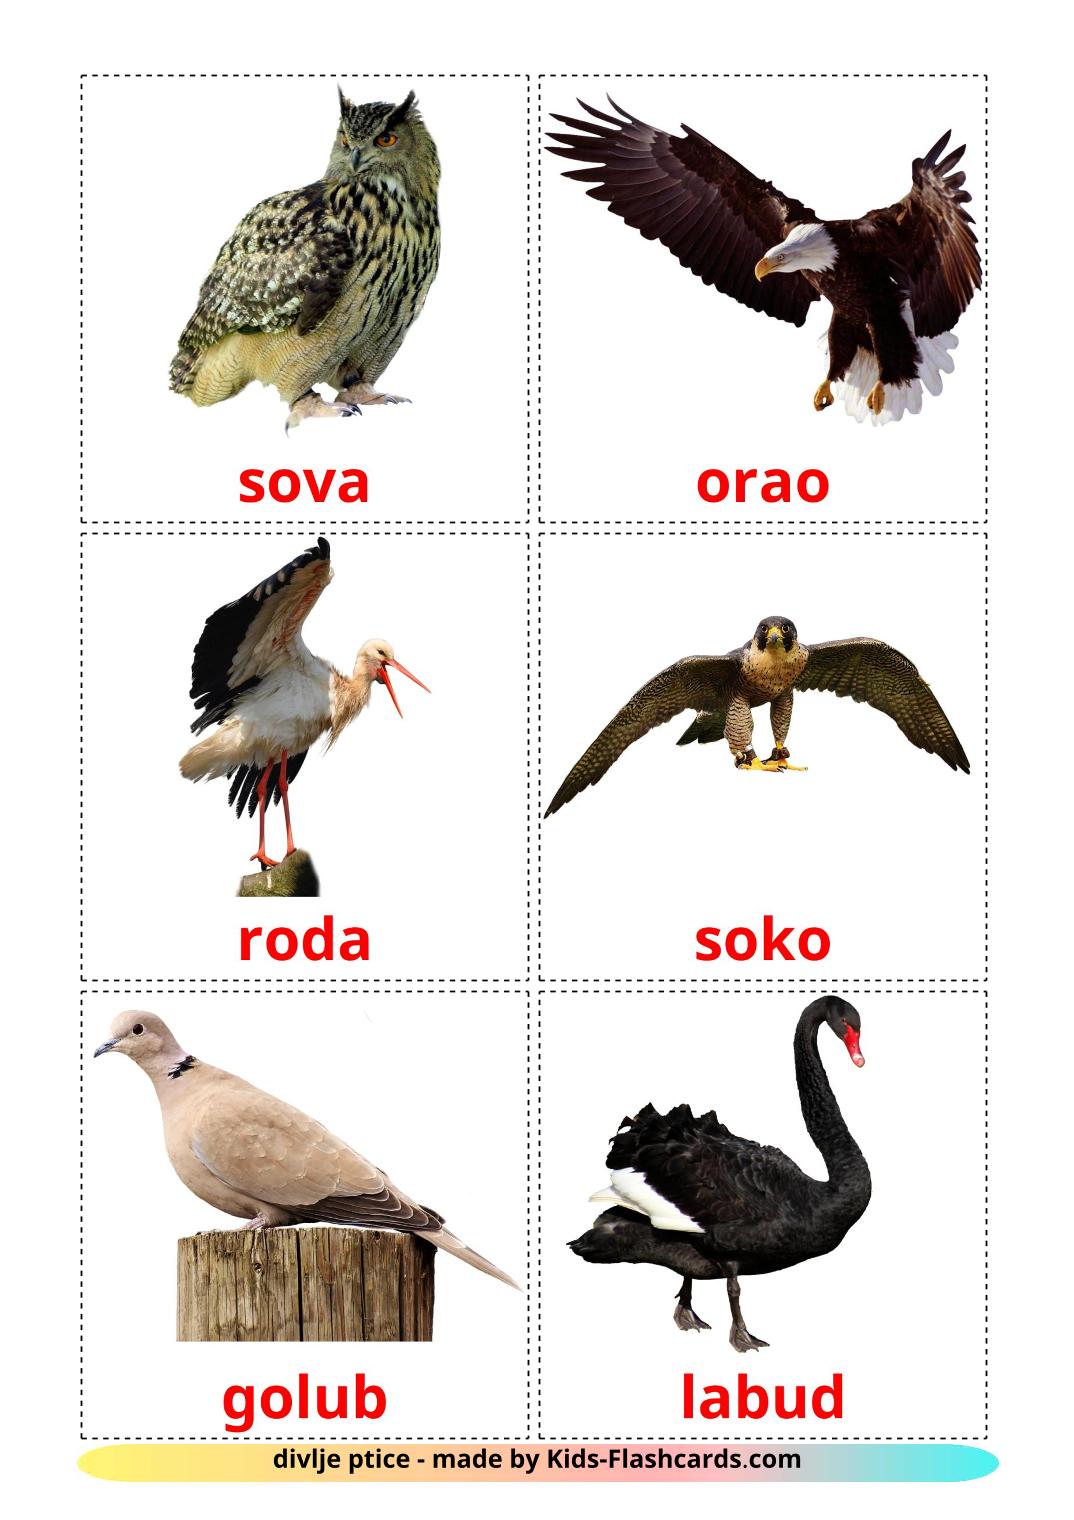 Pájaros salvajes - 18 fichas de bosnio para imprimir gratis 